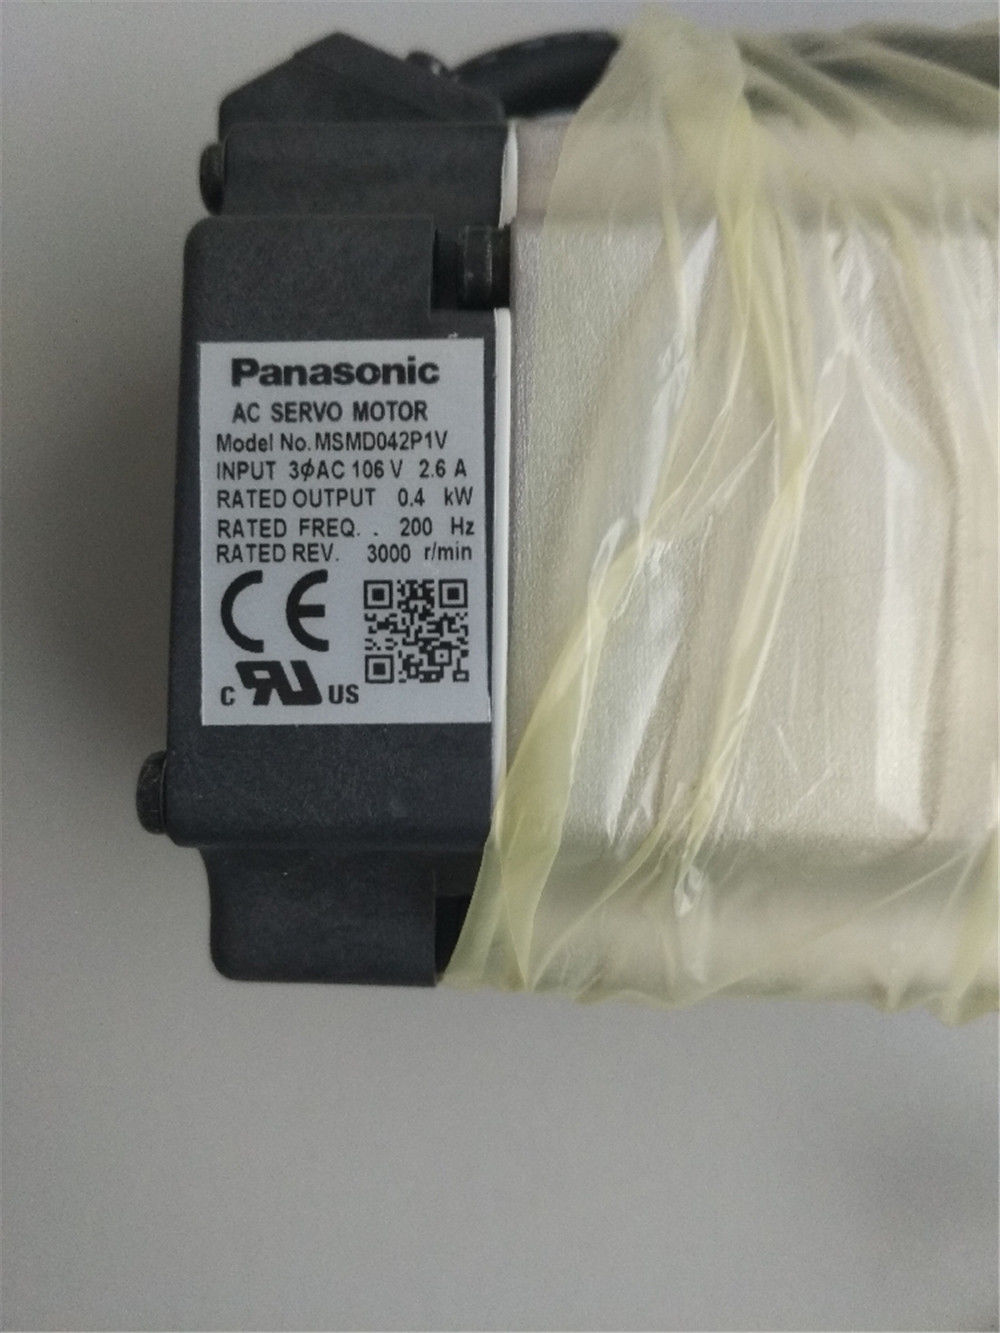 Brand NEW PANASONIC AC Servo motor MSMD042P1V in box - Click Image to Close